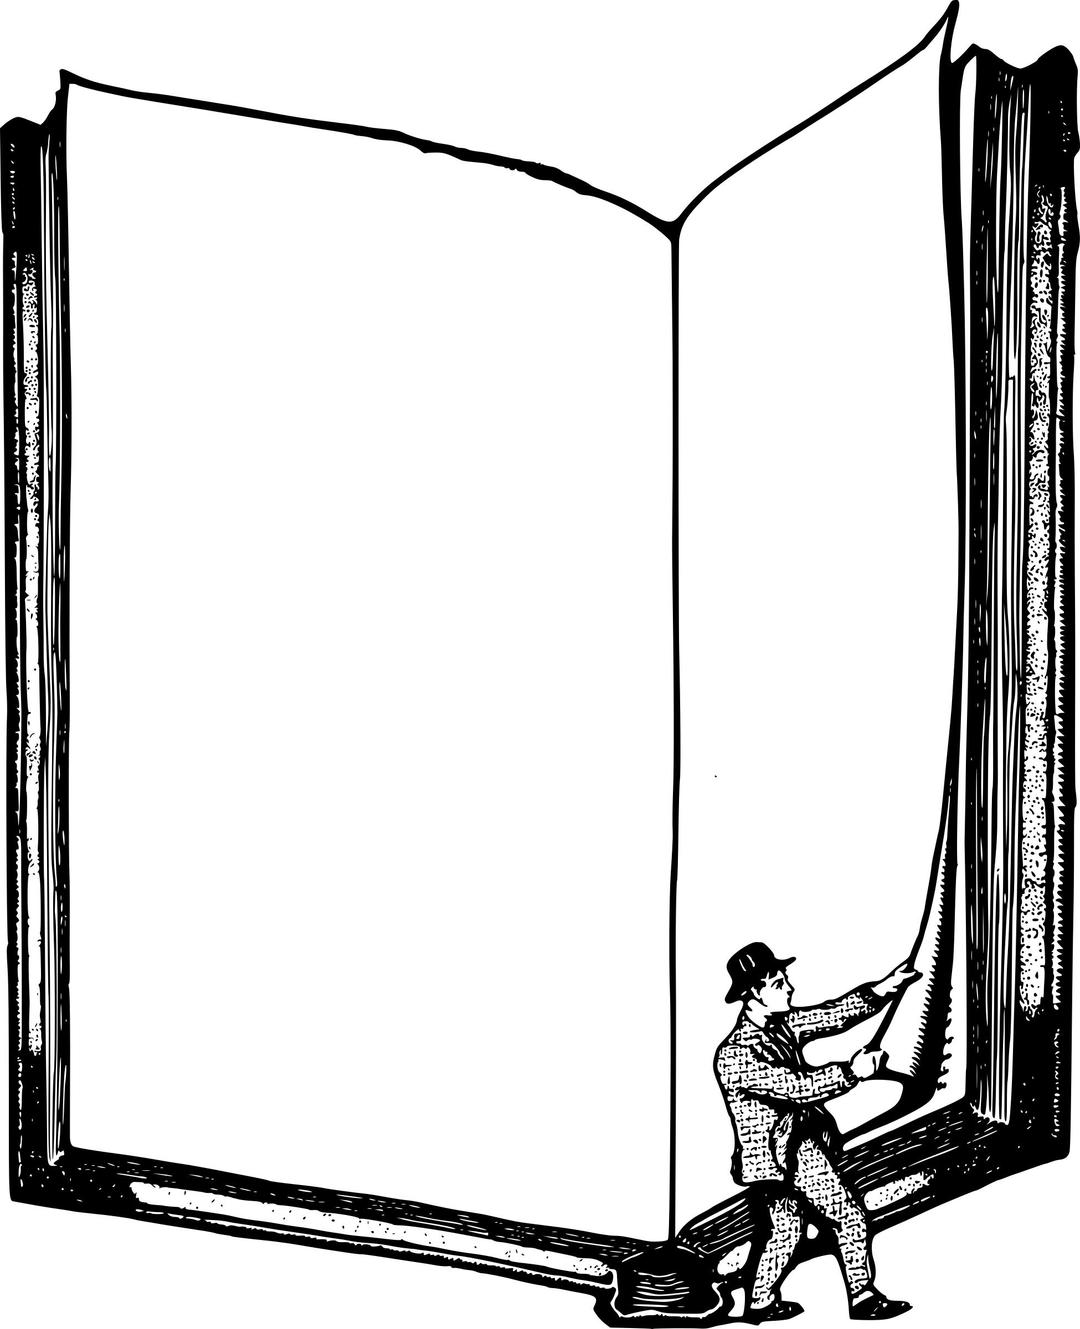 Man and Book - Frame png transparent